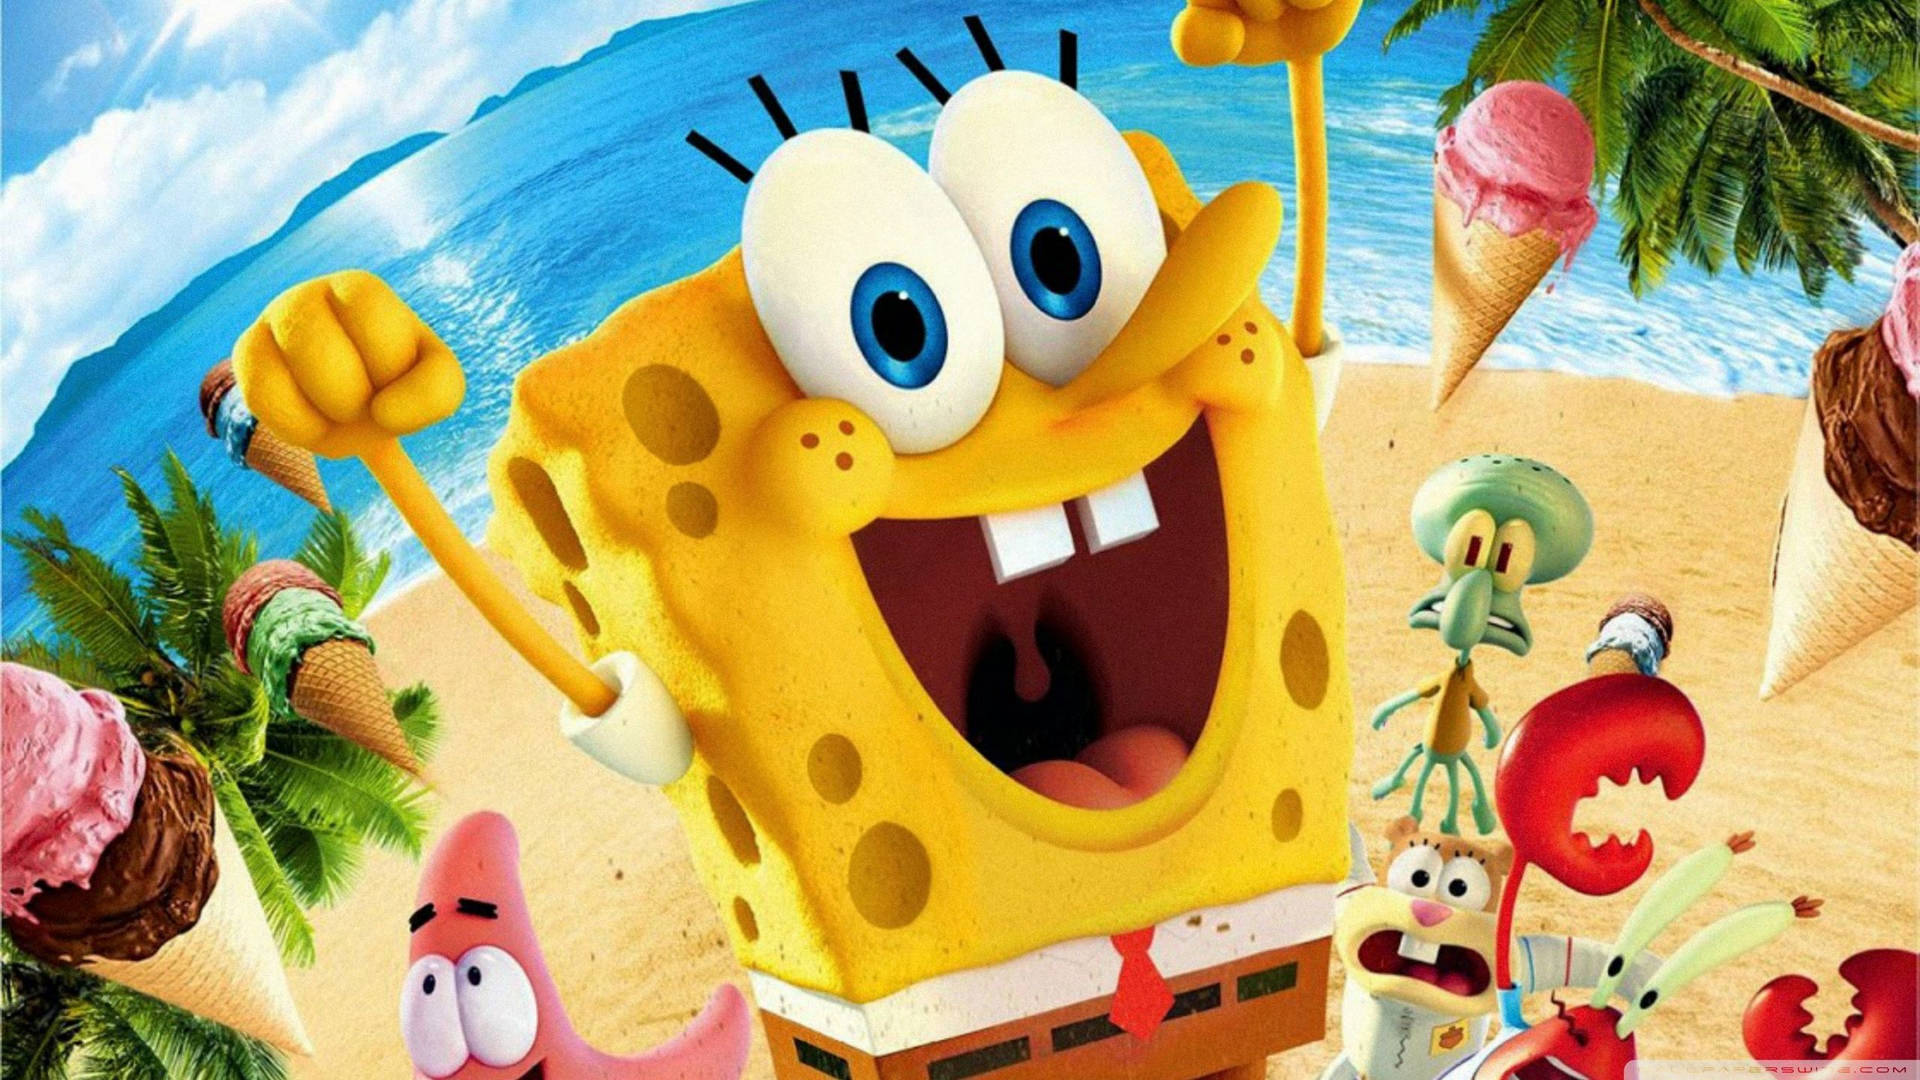 Spongebob 2560X1440 Wallpaper and Background Image